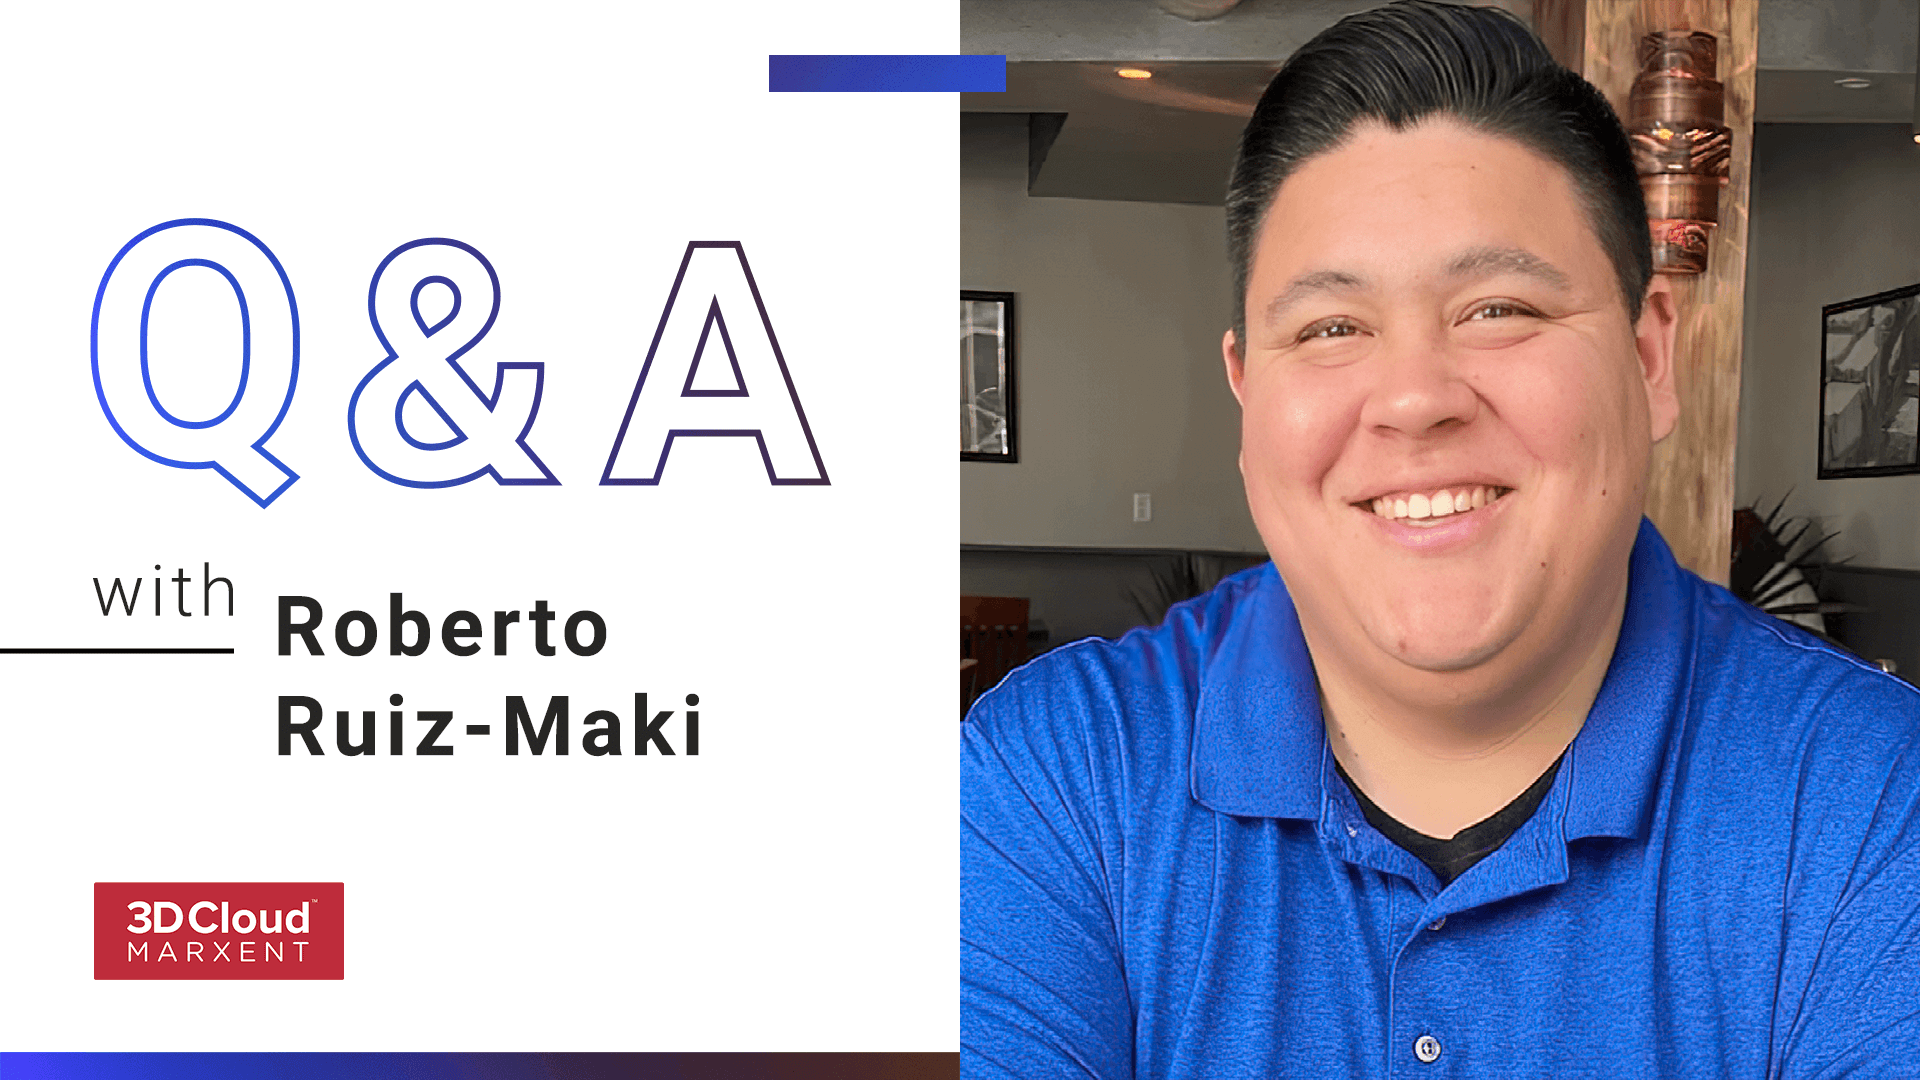 Employee Q&A with Roberto Ruiz-Maki